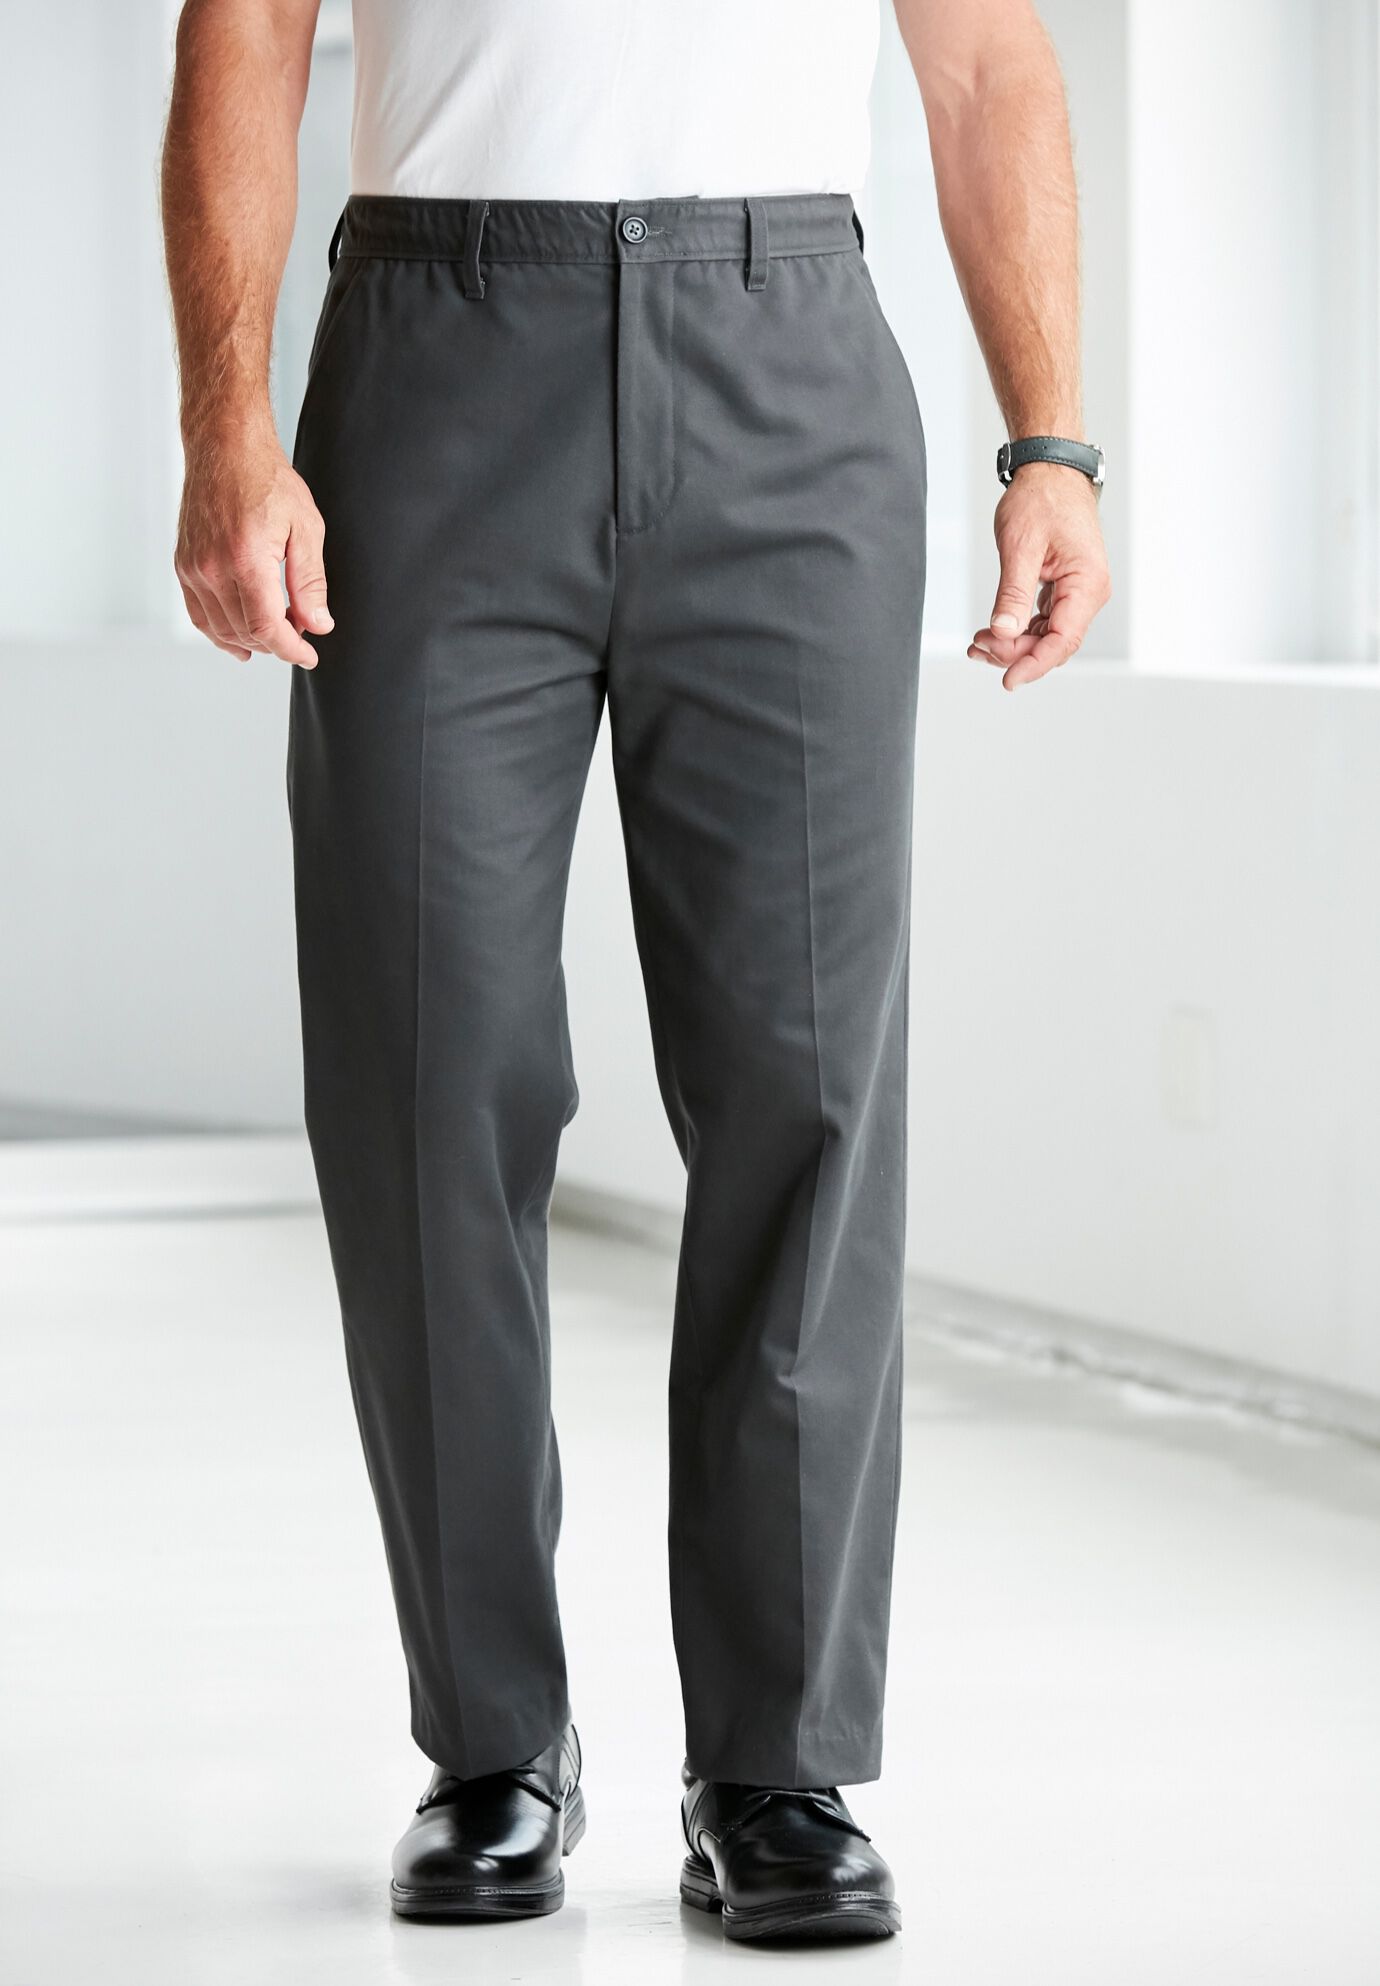 Buy Aswad Men's Wrinkle Free Pants for Men | Self Design Formal Regular Fit  Trousers (42, Biscuit) at Amazon.in